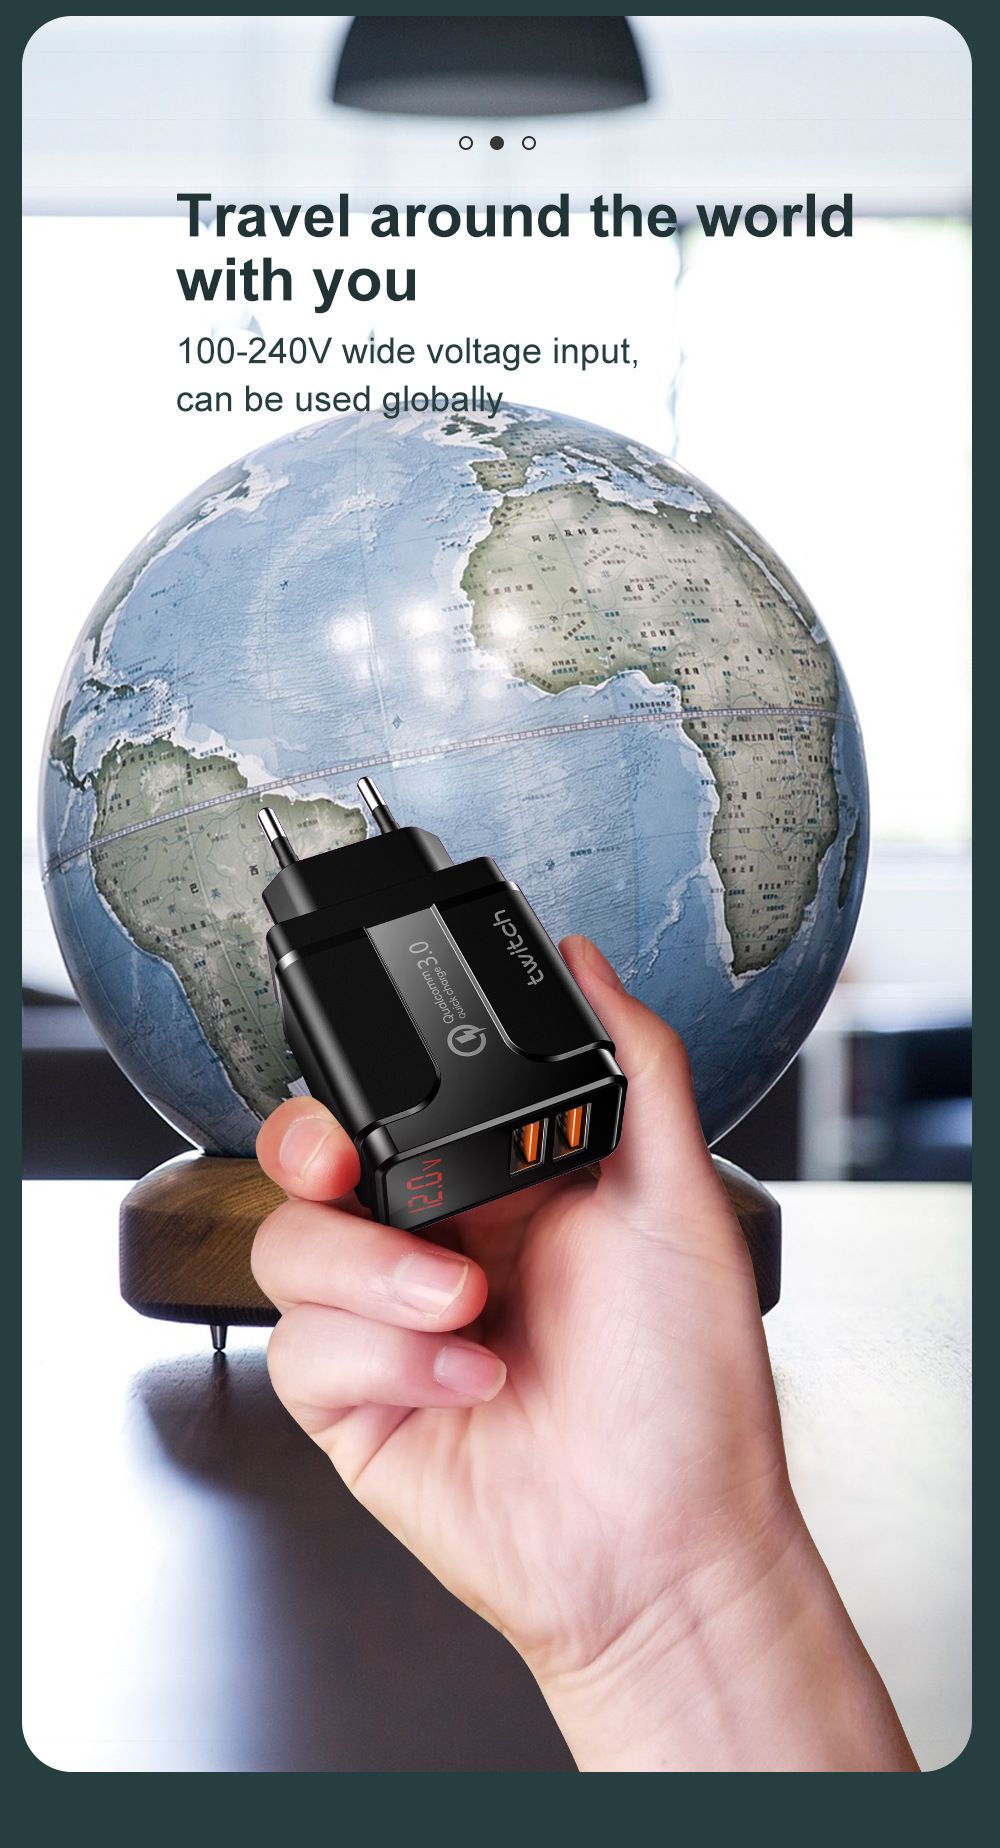 Twitch-18W-Dual-Port-USB-Charger-QC30-Quick-Charge-Wall-Charger-Adapter-With-EU-Plug-US-Plug-UK-Plug-1746164